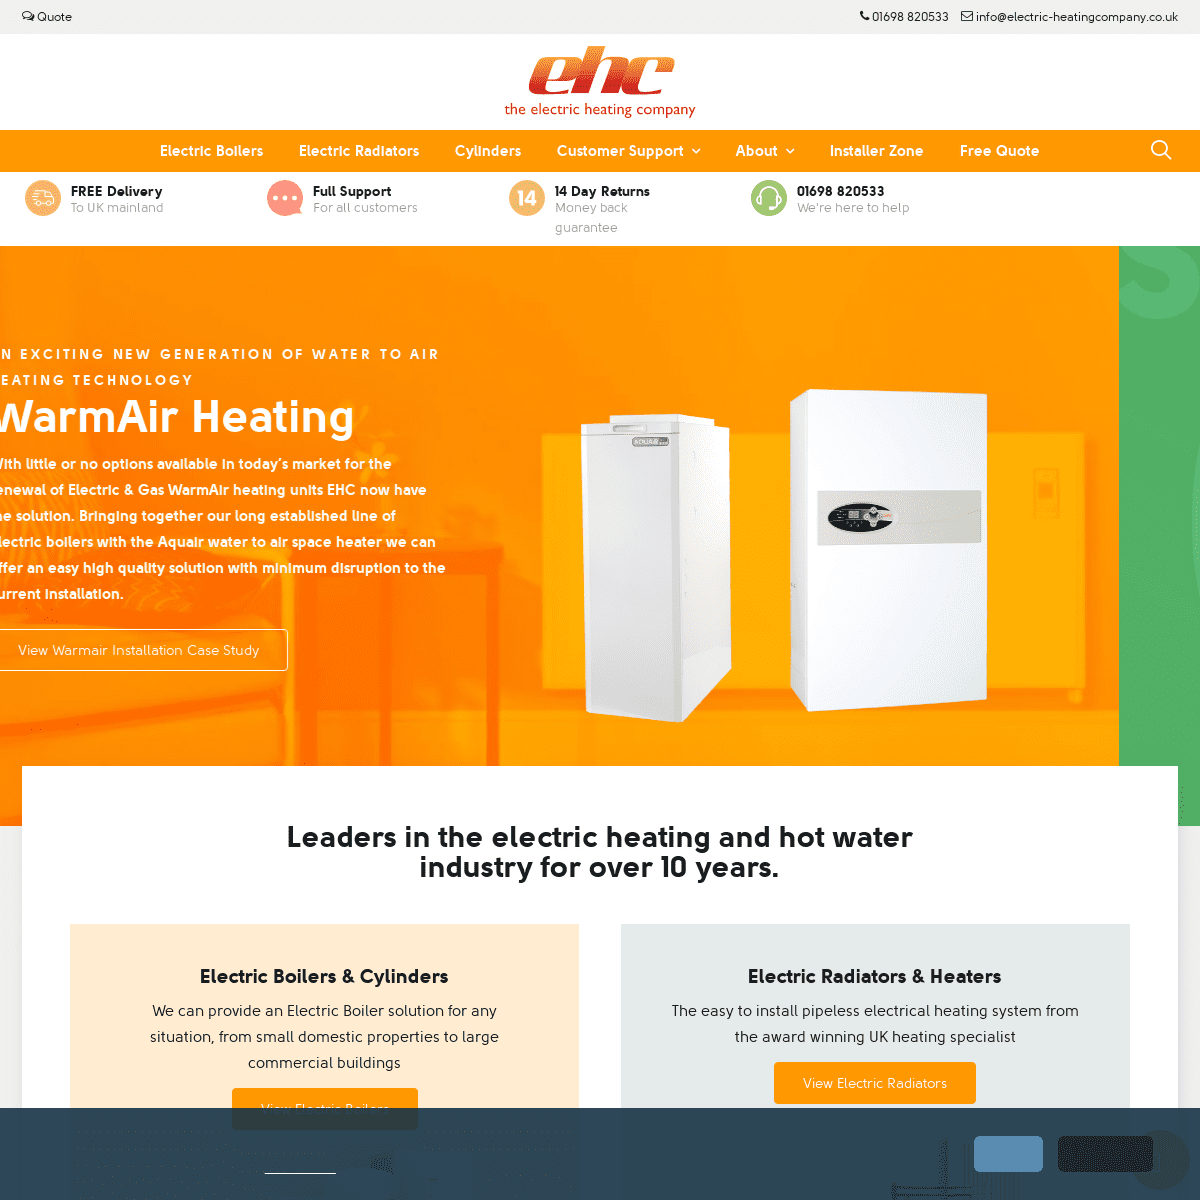 A complete backup of electric-heatingcompany.co.uk